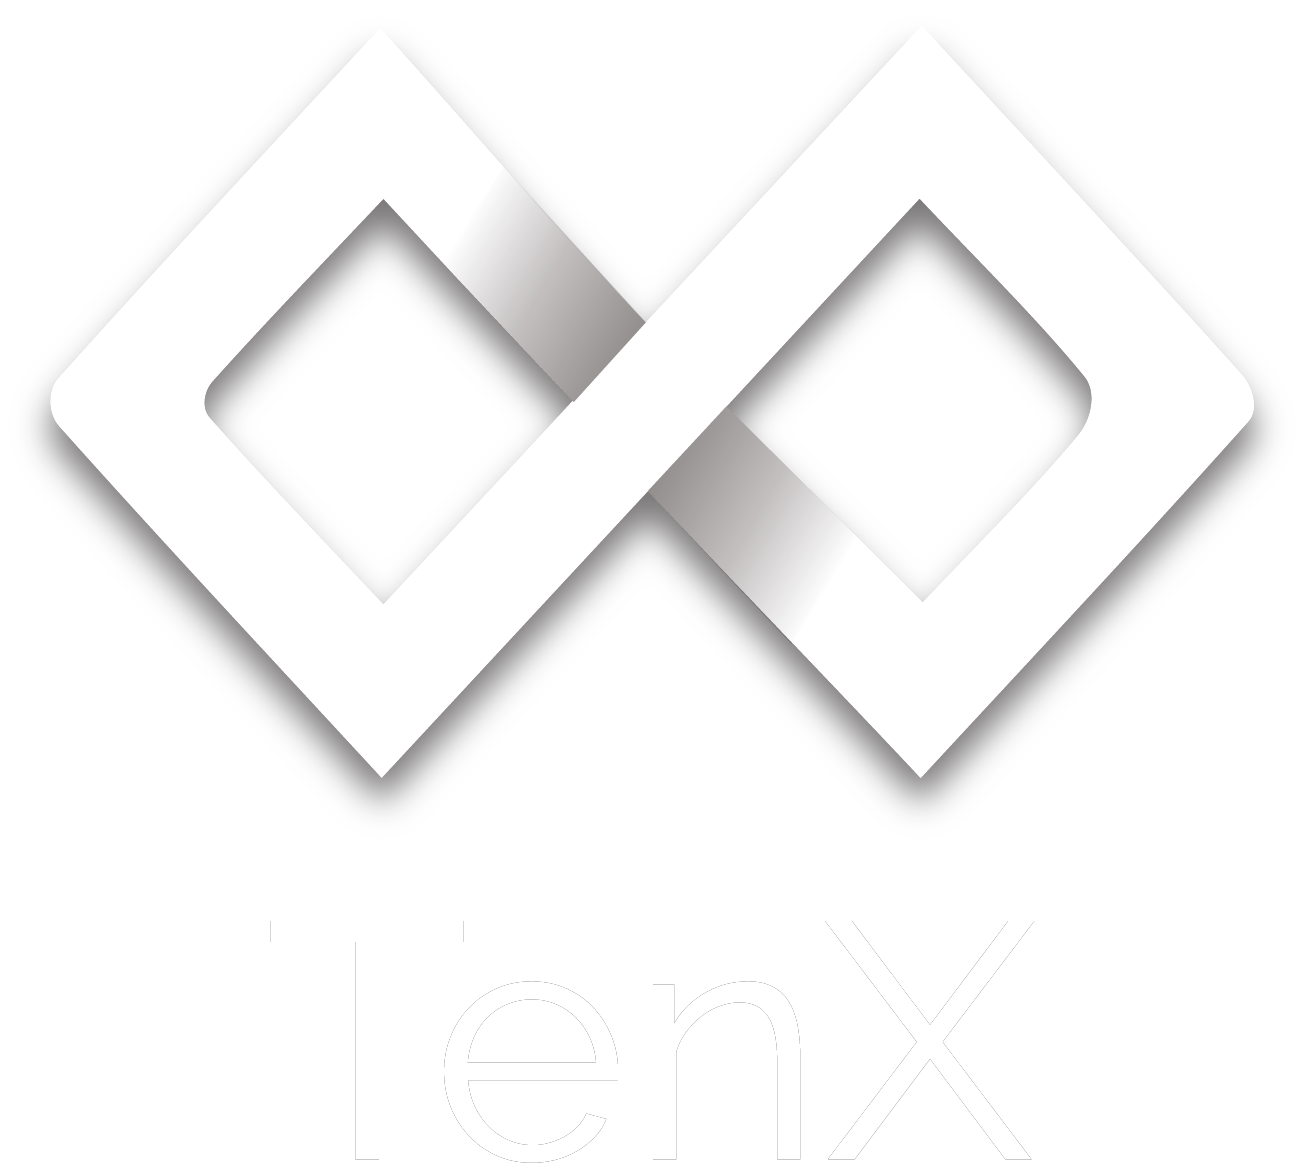 tenx_logo_light.png